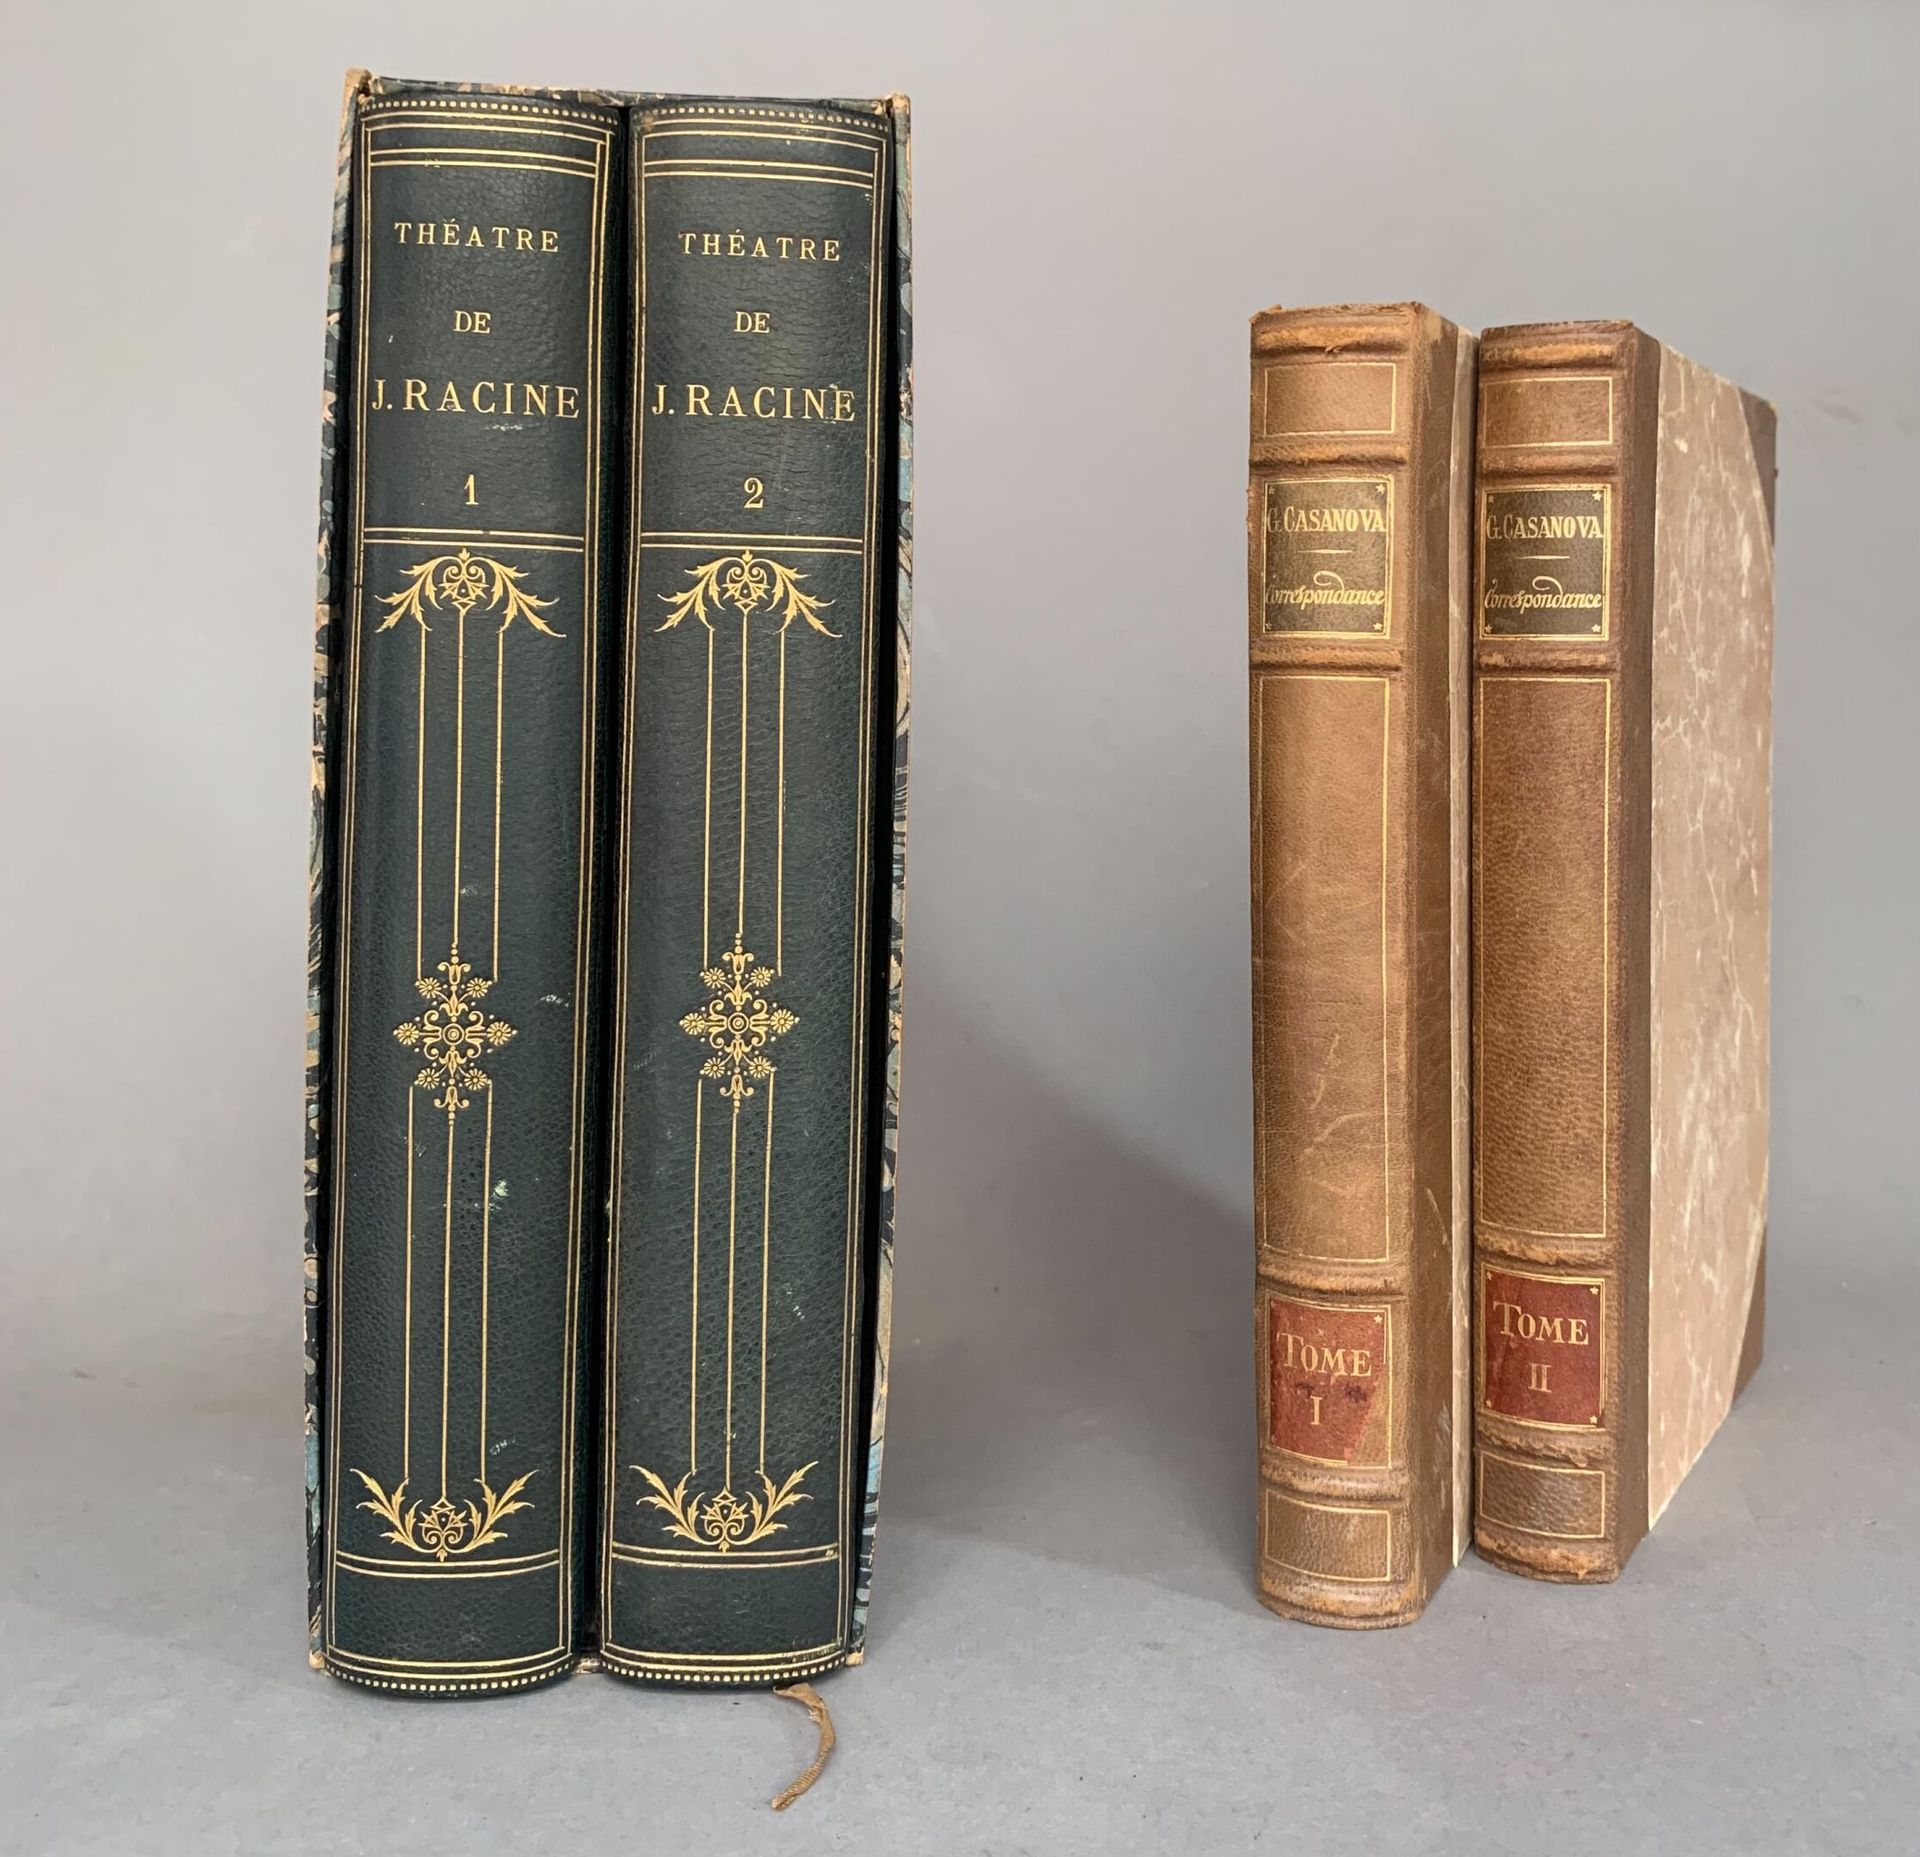 Null [文学] 拉辛的戏剧。巴黎。Jousset.1878年。2卷8开本。



封二上有亨利-福西隆的书印。



卡萨诺瓦-贾科莫被附上了。与J.F. &hellip;